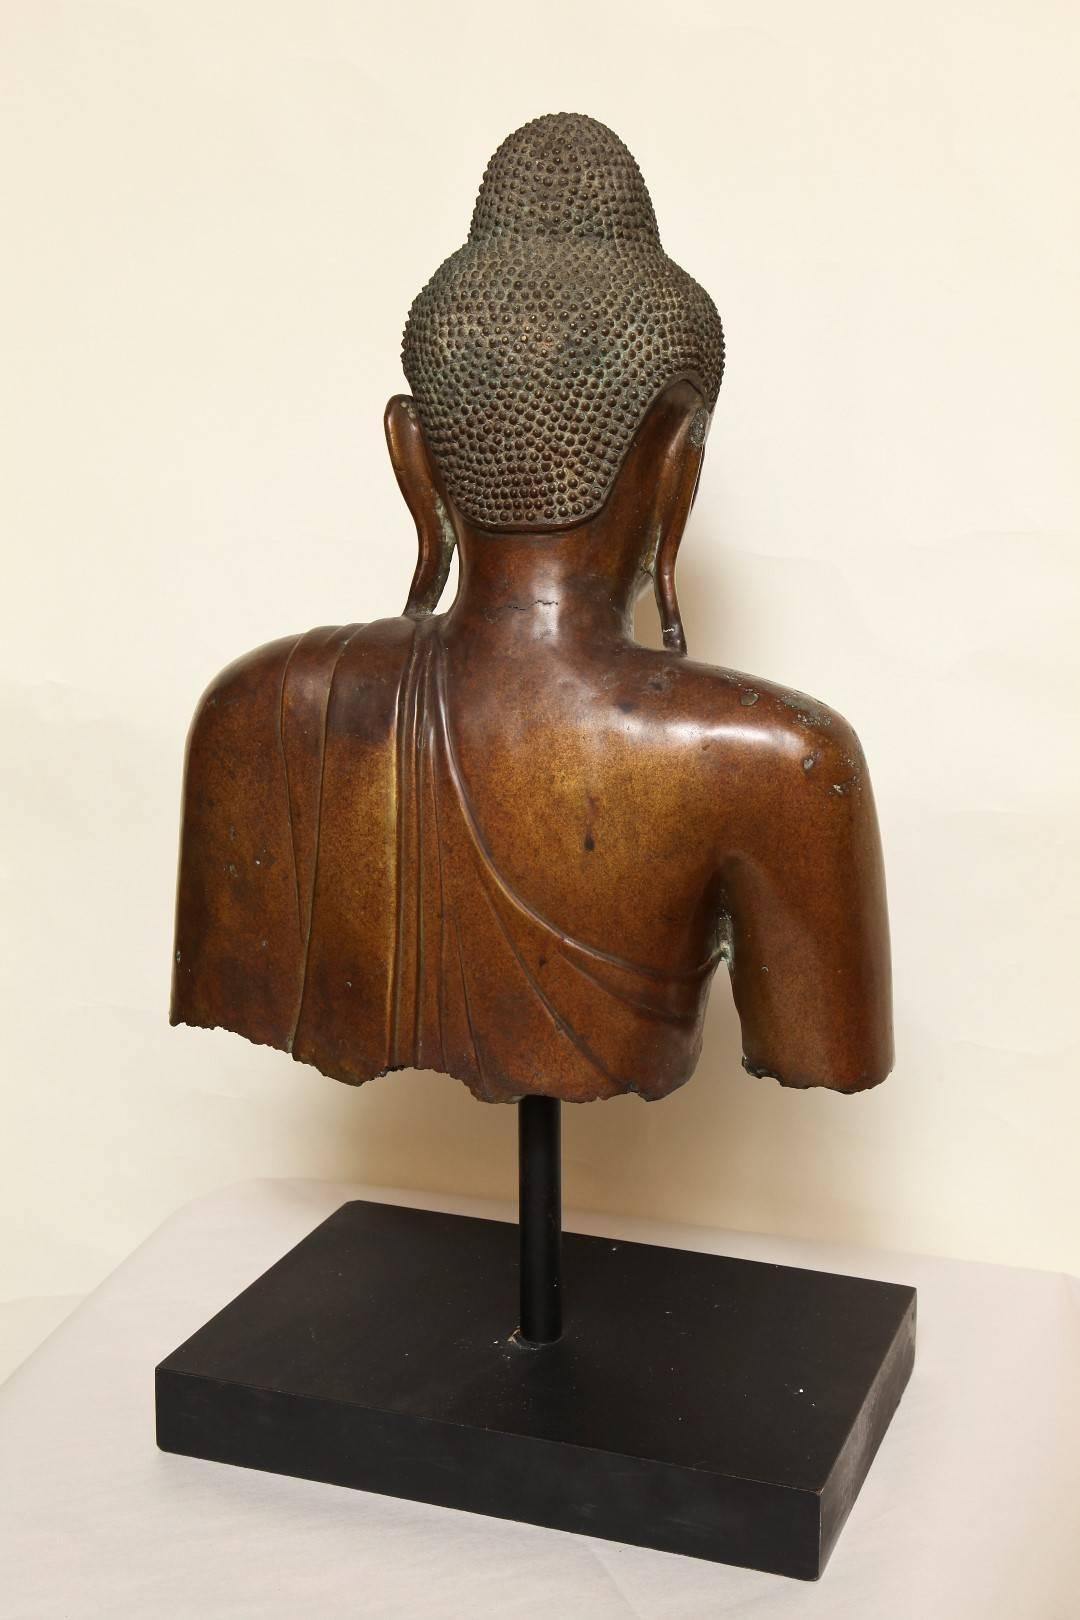 19th Century Bust of Buddha Sculpture